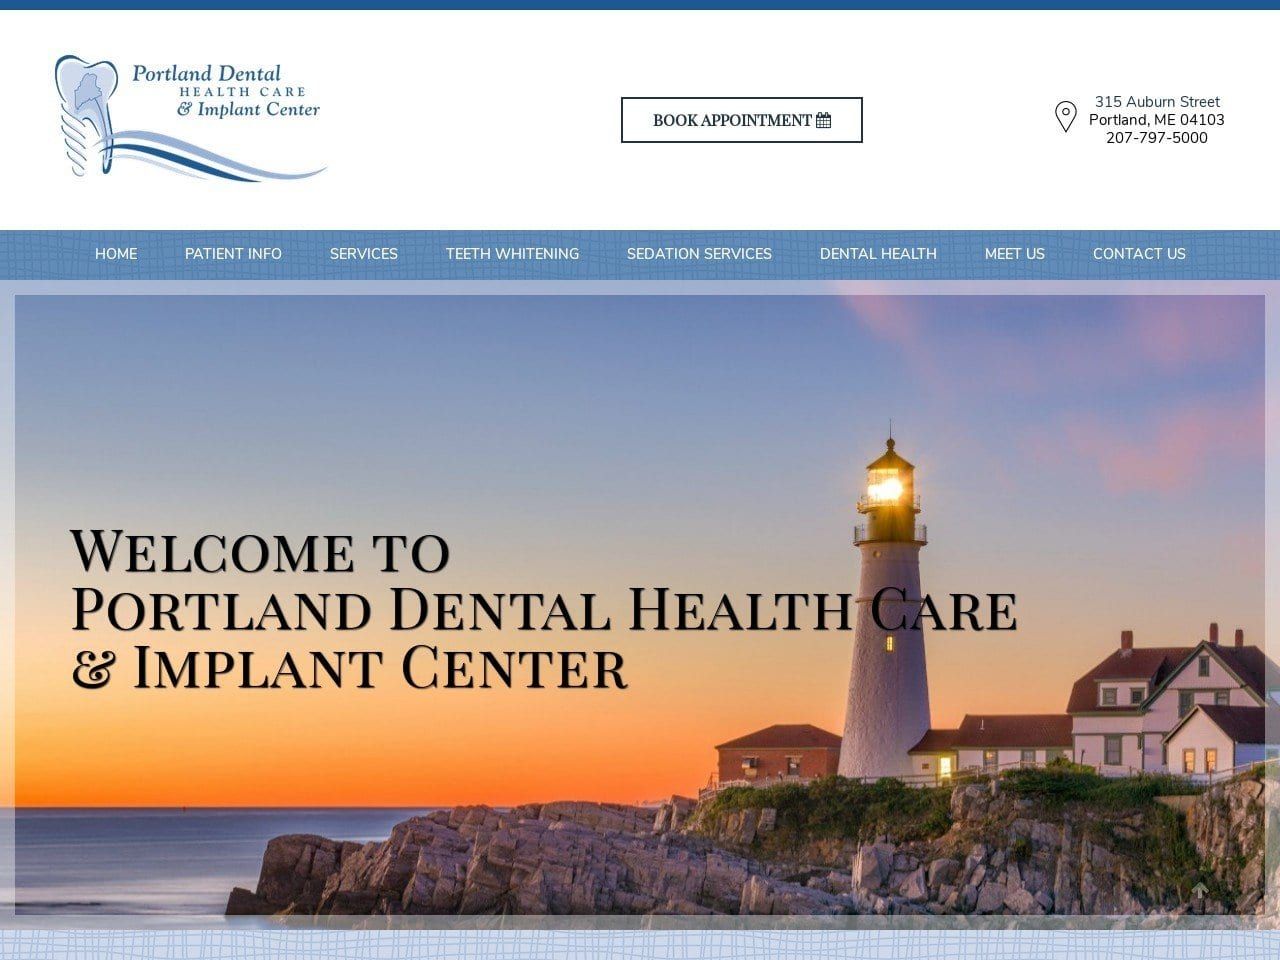 Portlandmaine Dental Website Screenshot from portlandmainedental.com